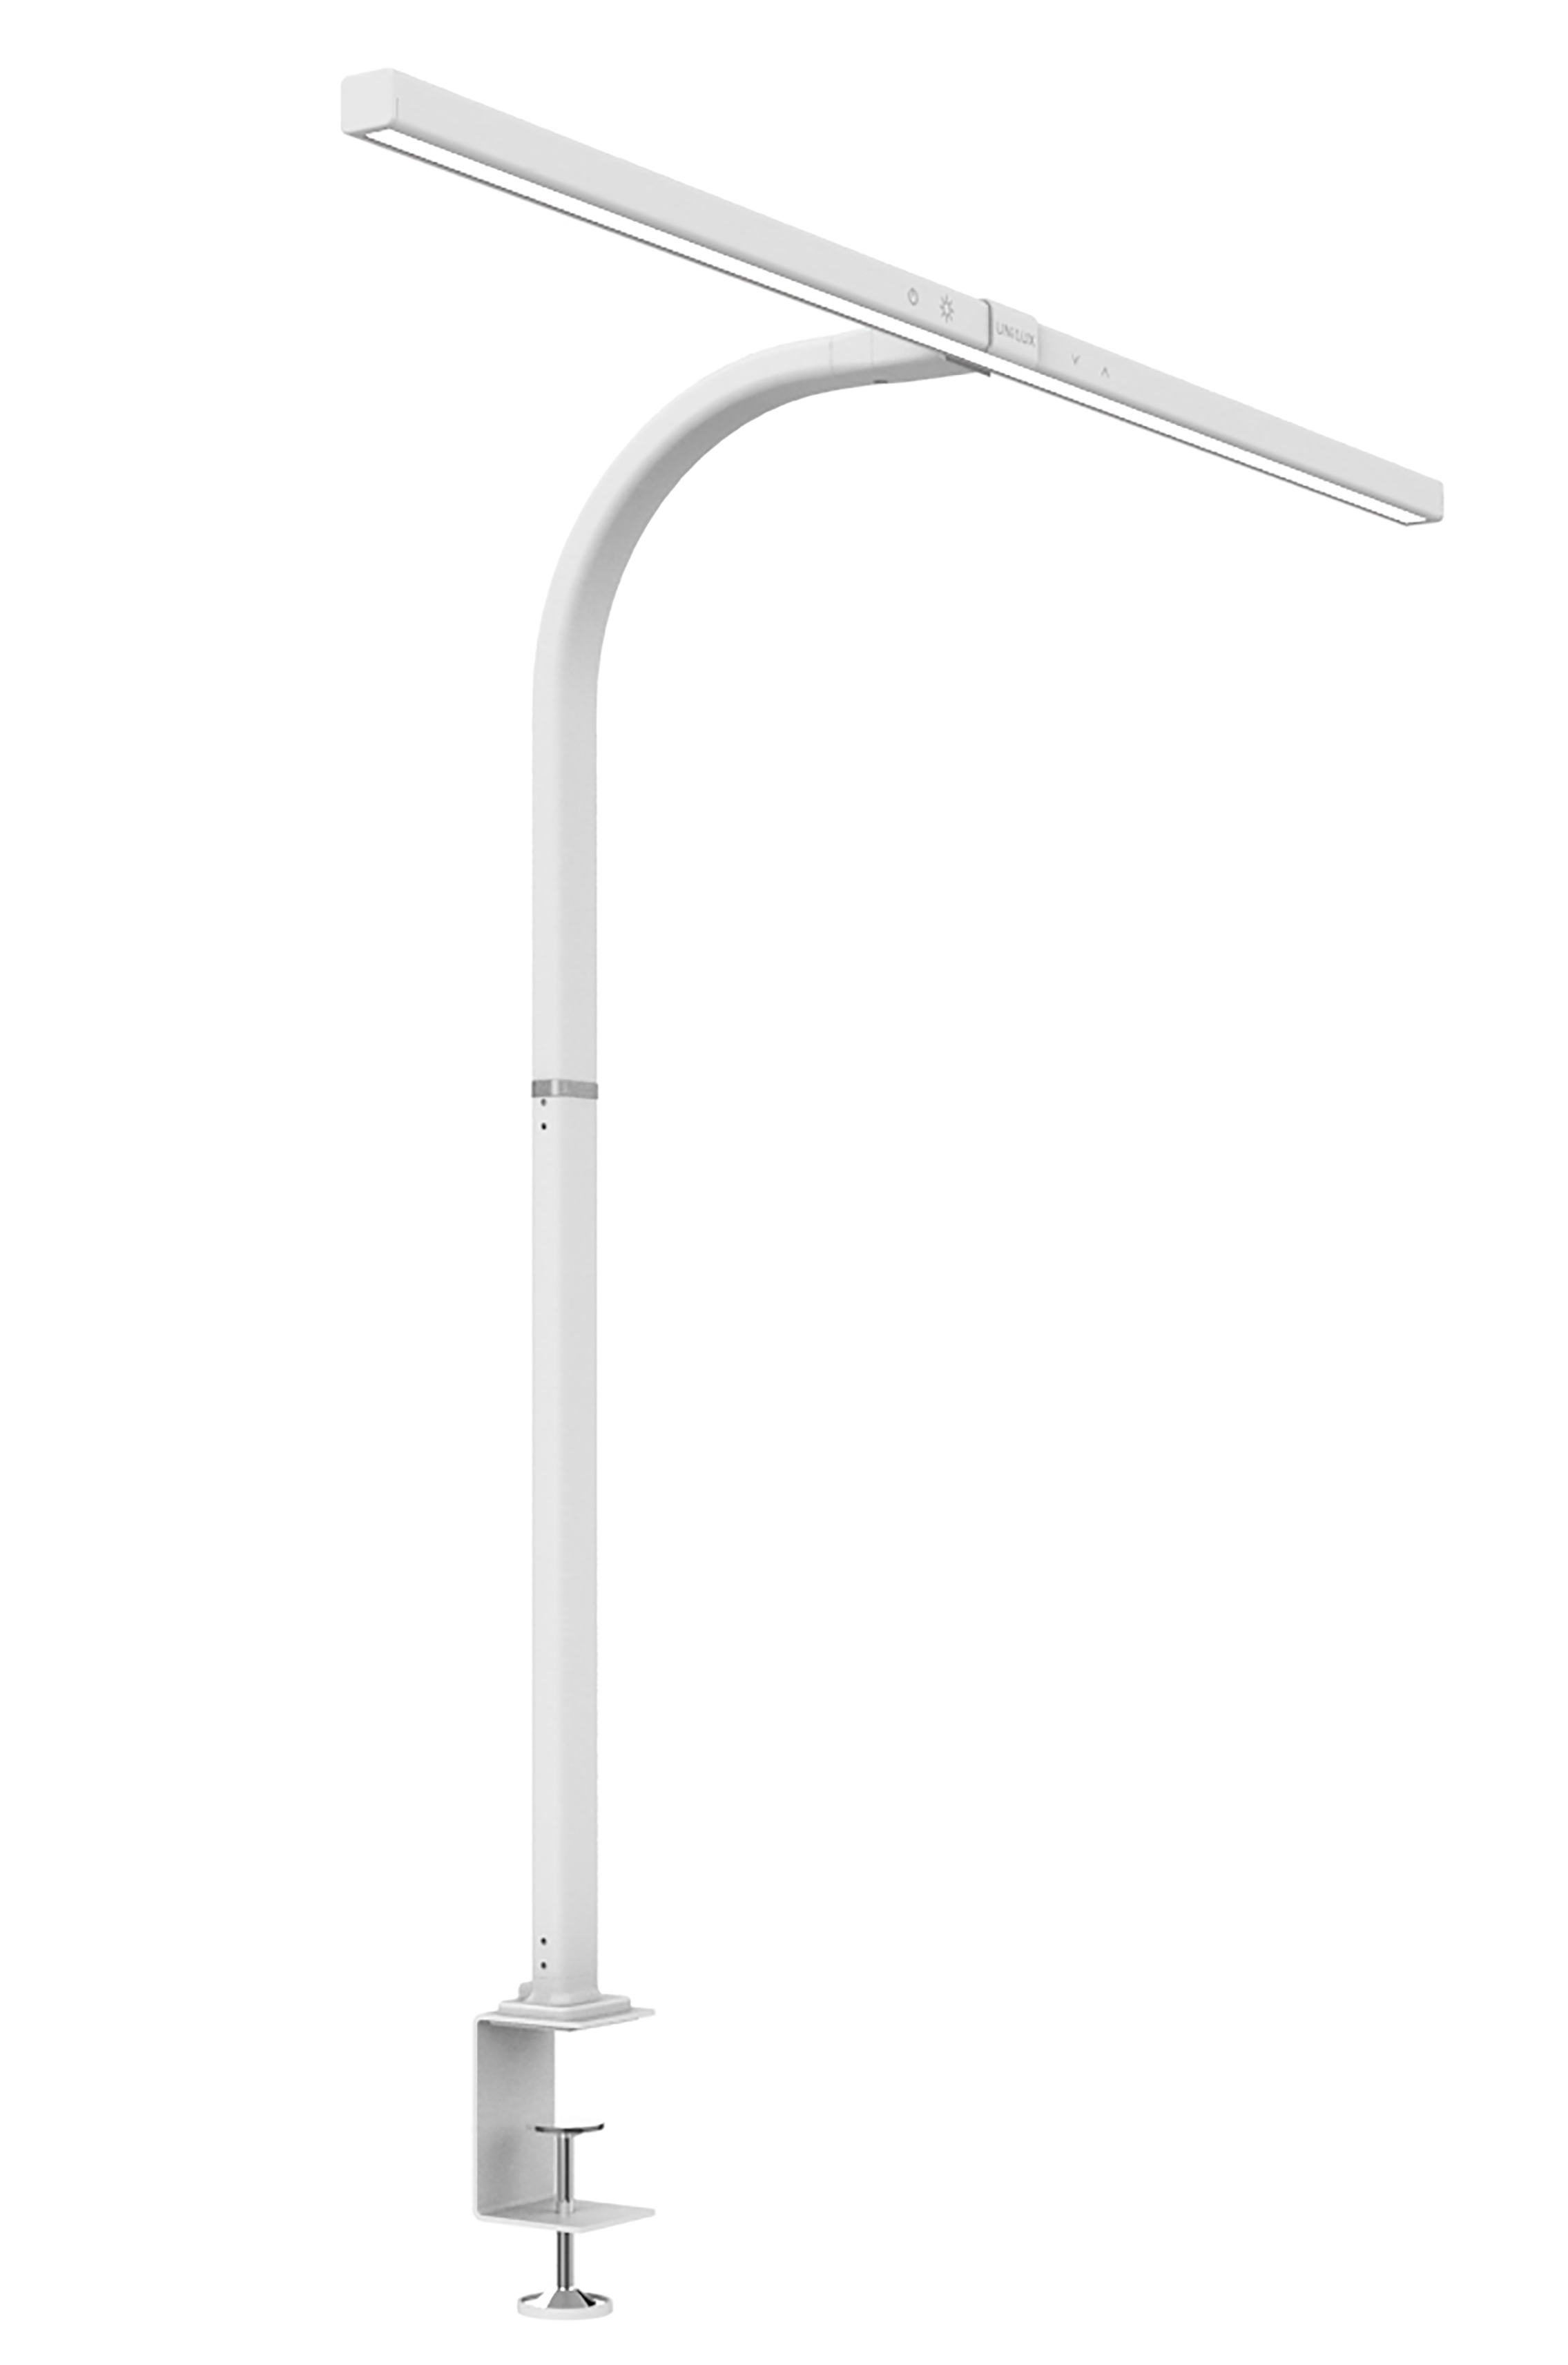 UNILUX LED-lampe de table Strata 400165231 blanc, dimmable